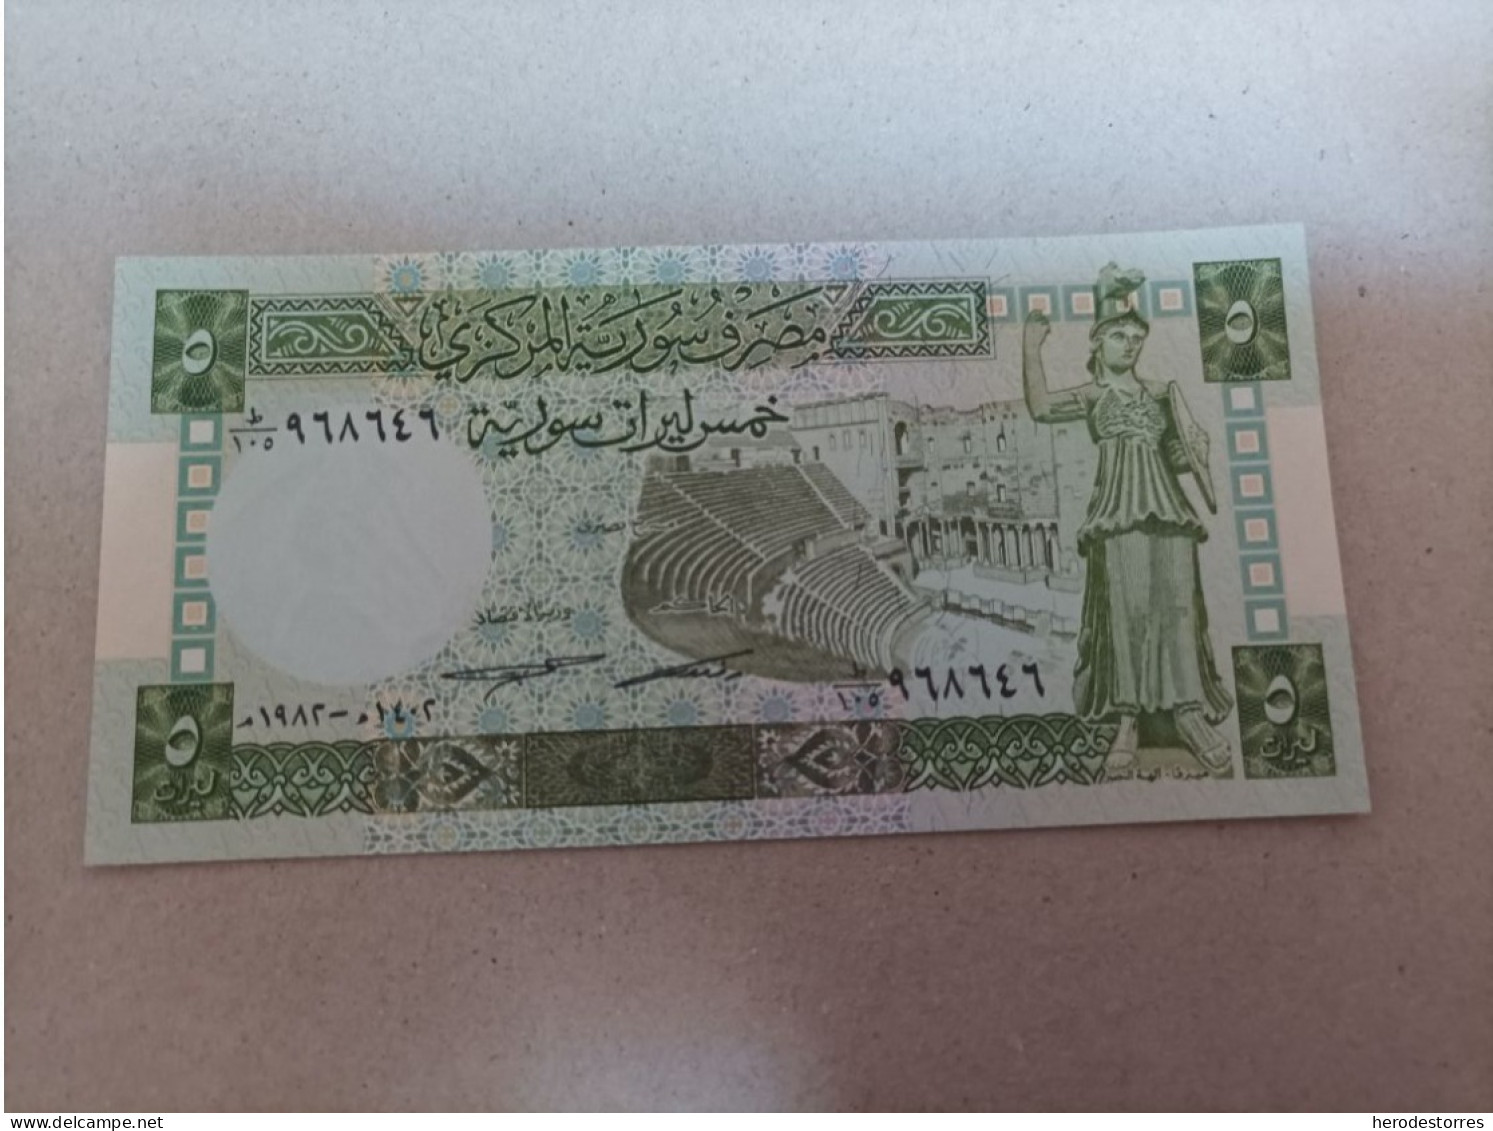 Billete Siria De 5 Syrian Pounds, Año 1982, UNC - Syrien